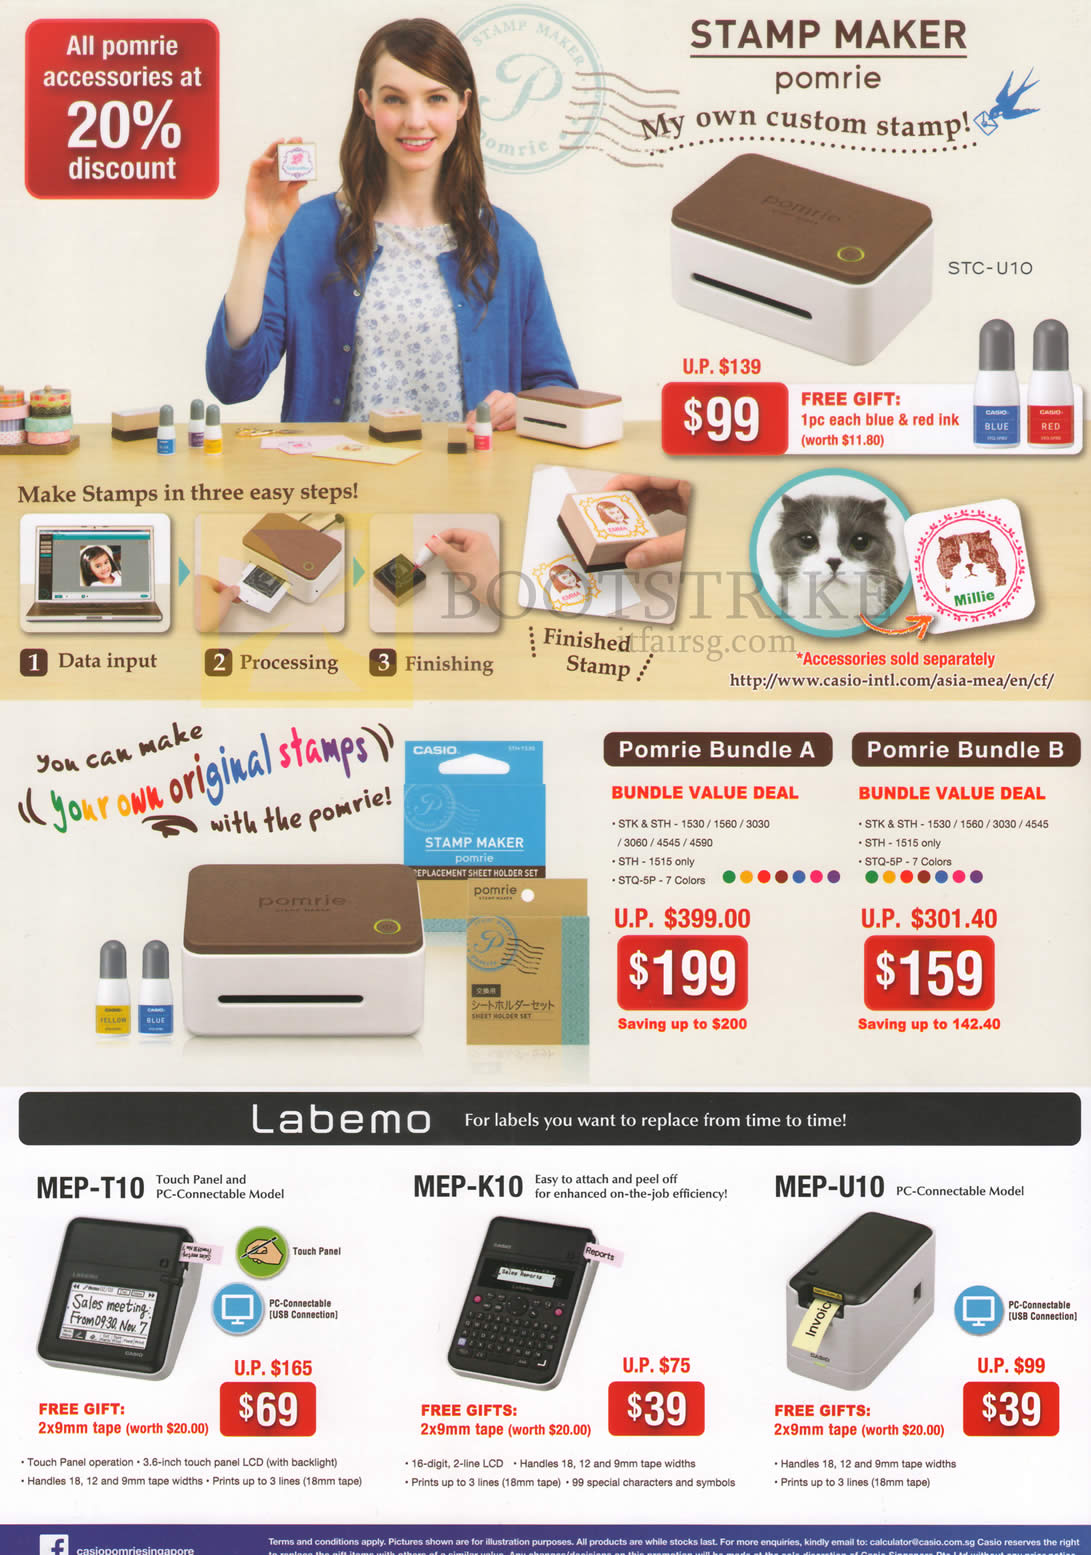 COMEX 2016 price list image brochure of Casio Stamp Maker, Labellers, Pomrie Bundle A, B, Labemo MEP-T10, K10, U10